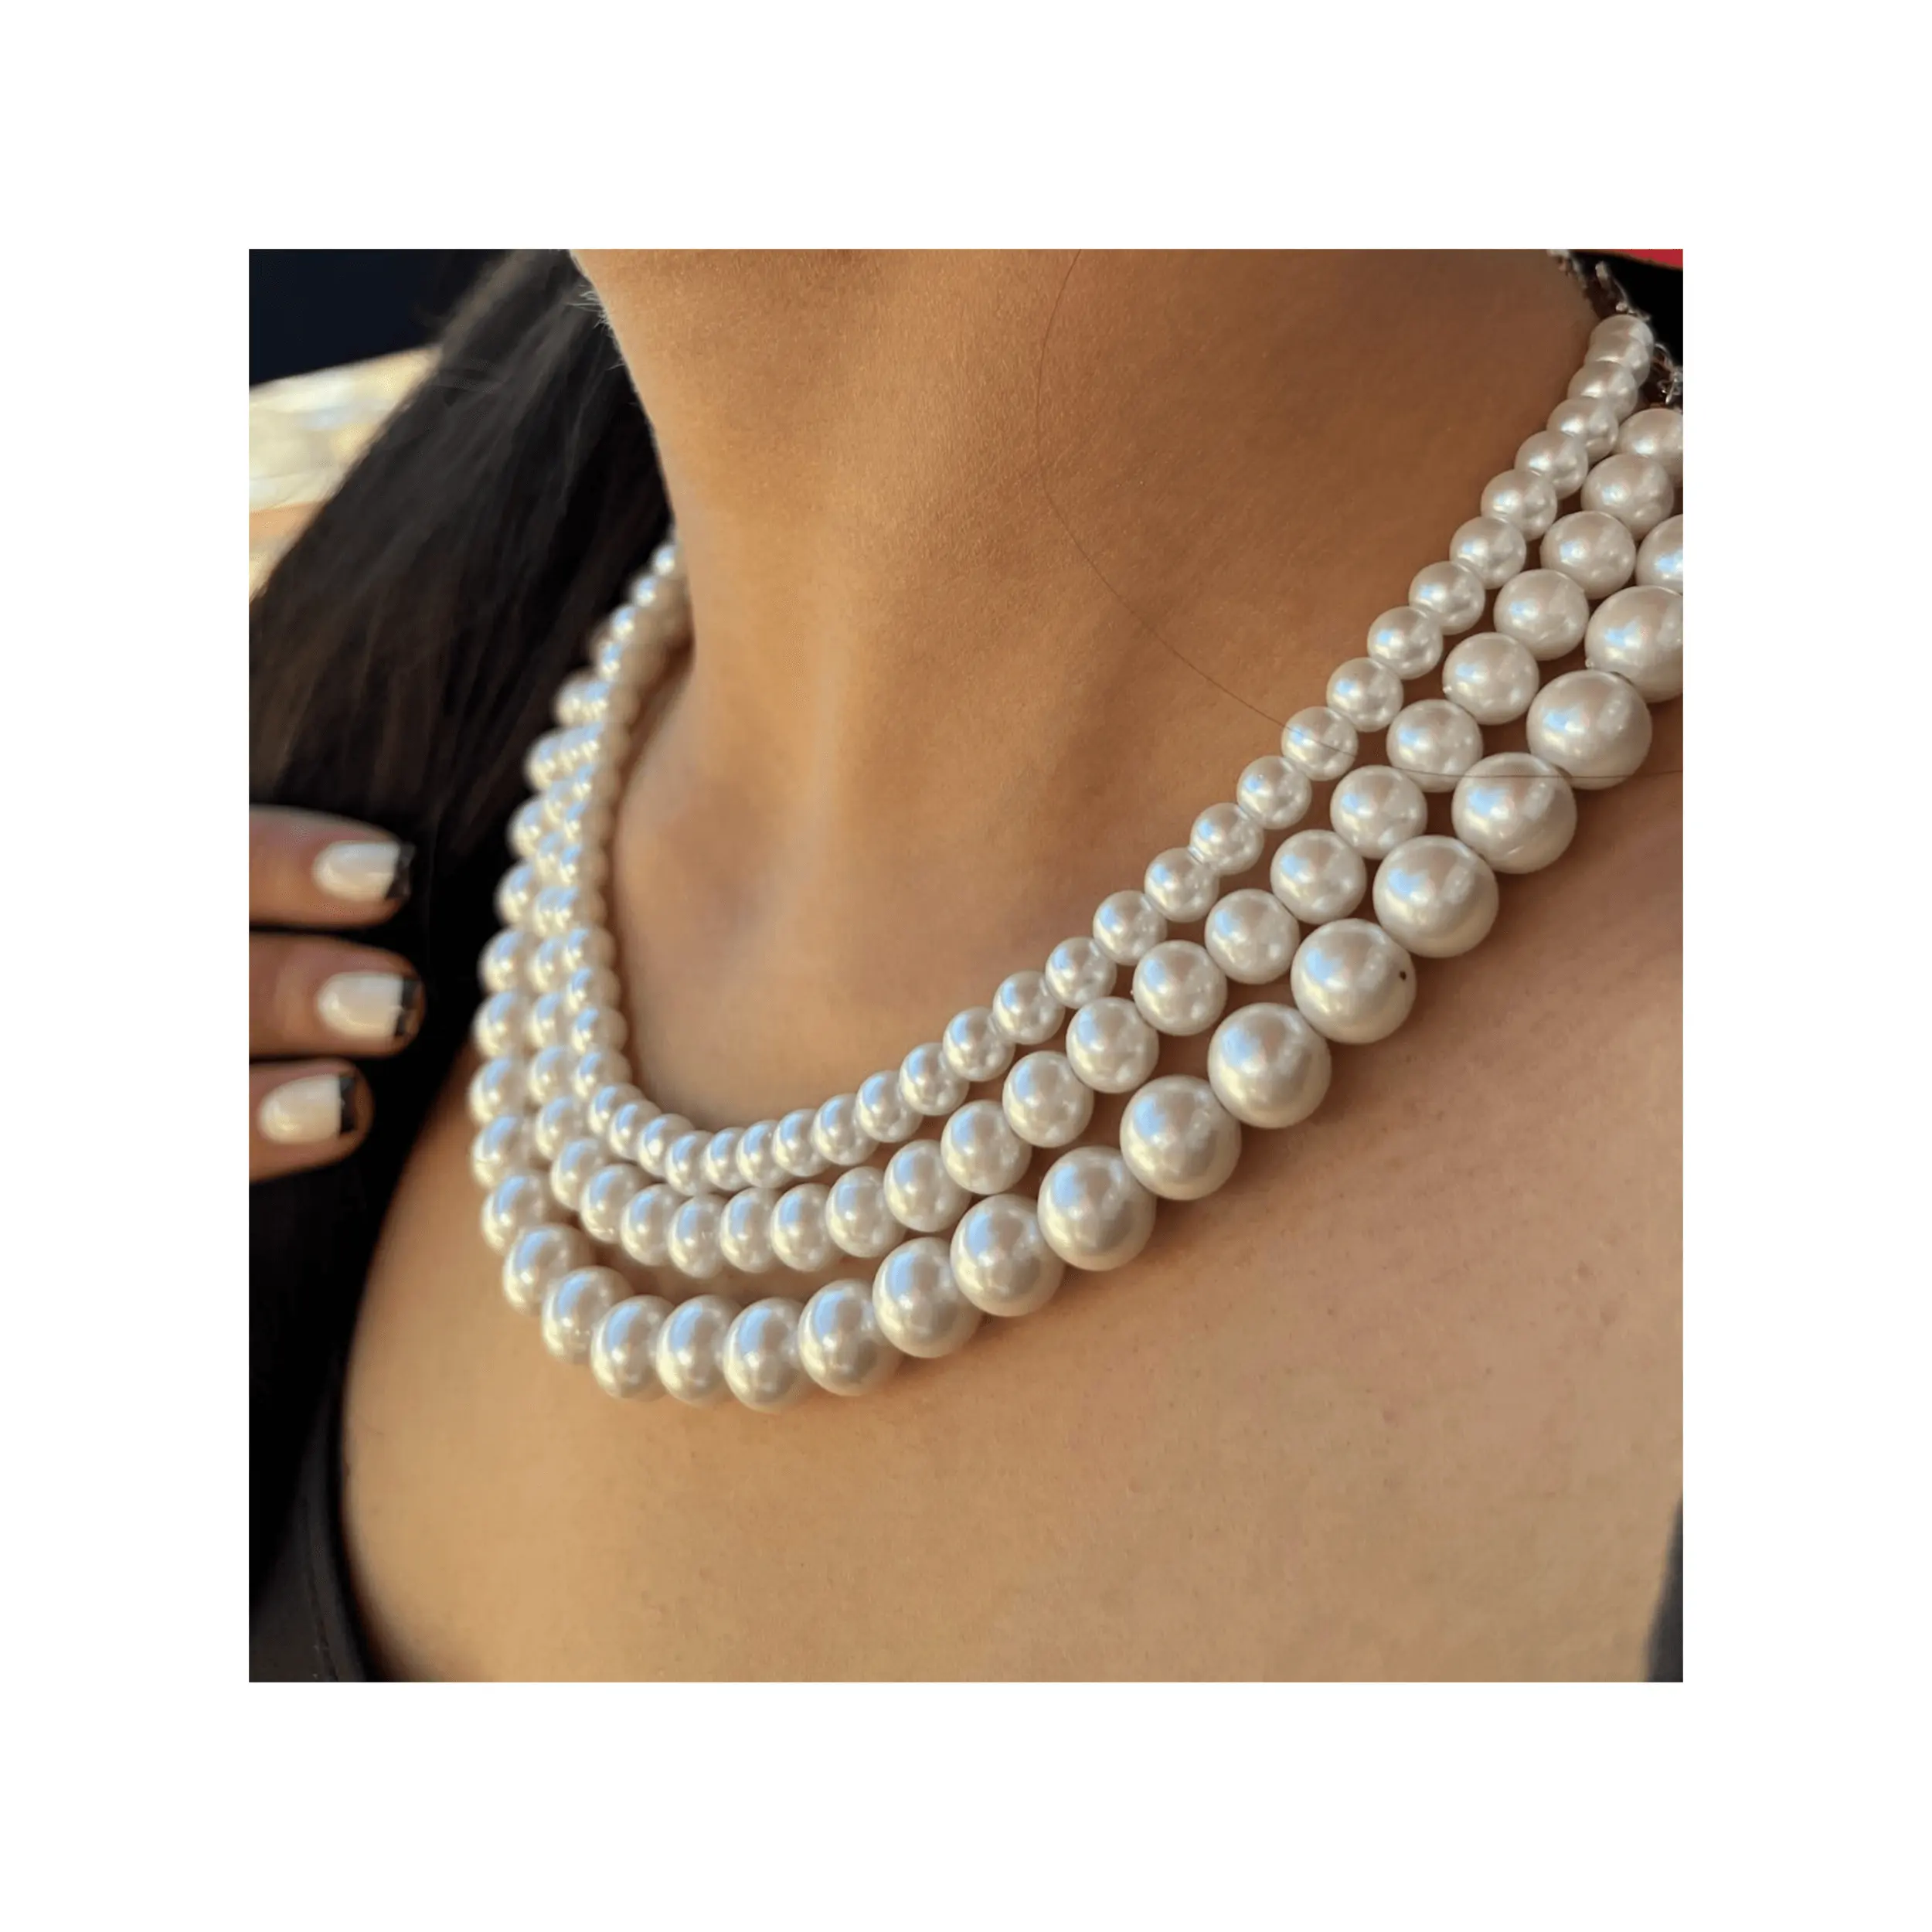 Mode Großhandel Imitation Perlen Süßwasser Perlenkette 6-12mm Hot Selling Perlenkette Set Schmuck für Frauen